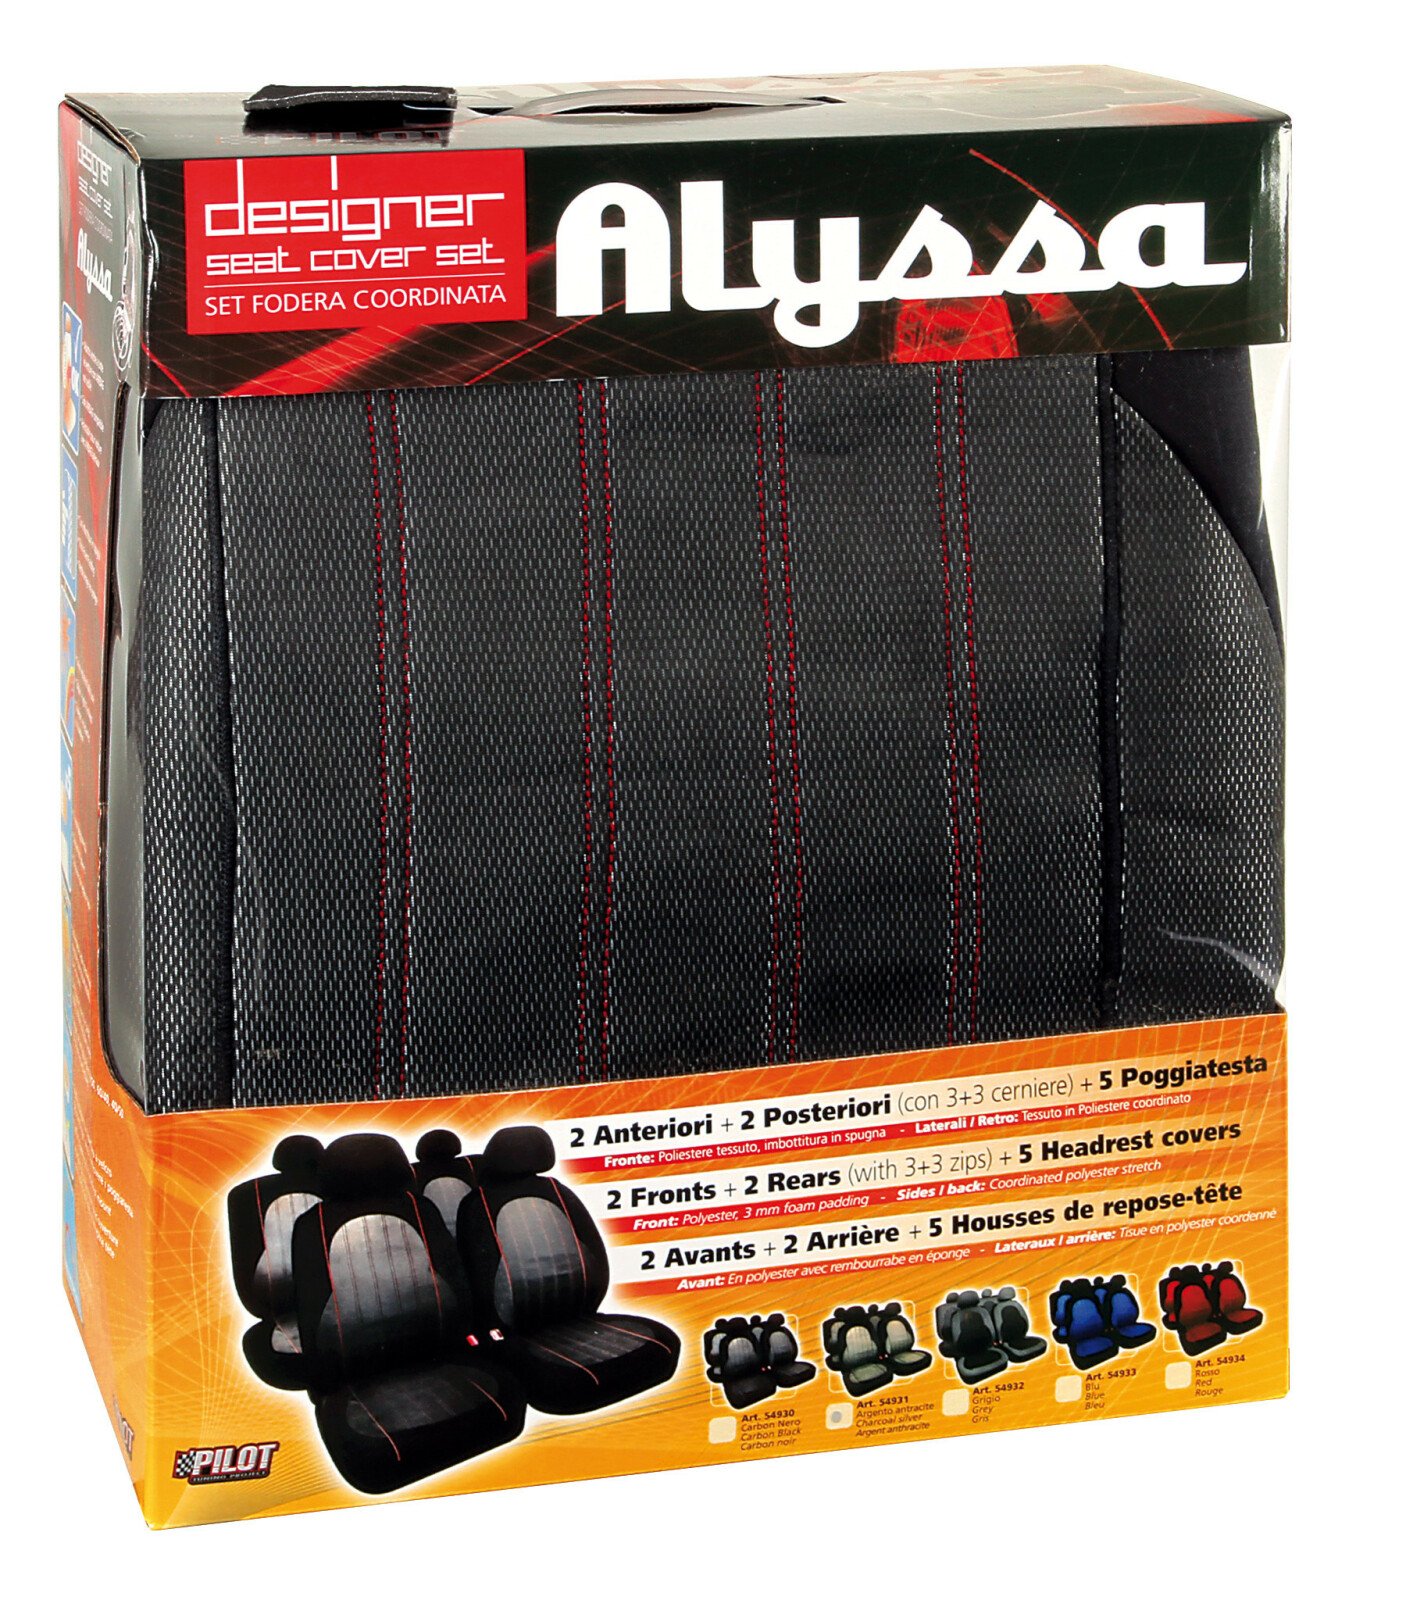 Alyssa seat covers 9pcs - Anthracit thumb